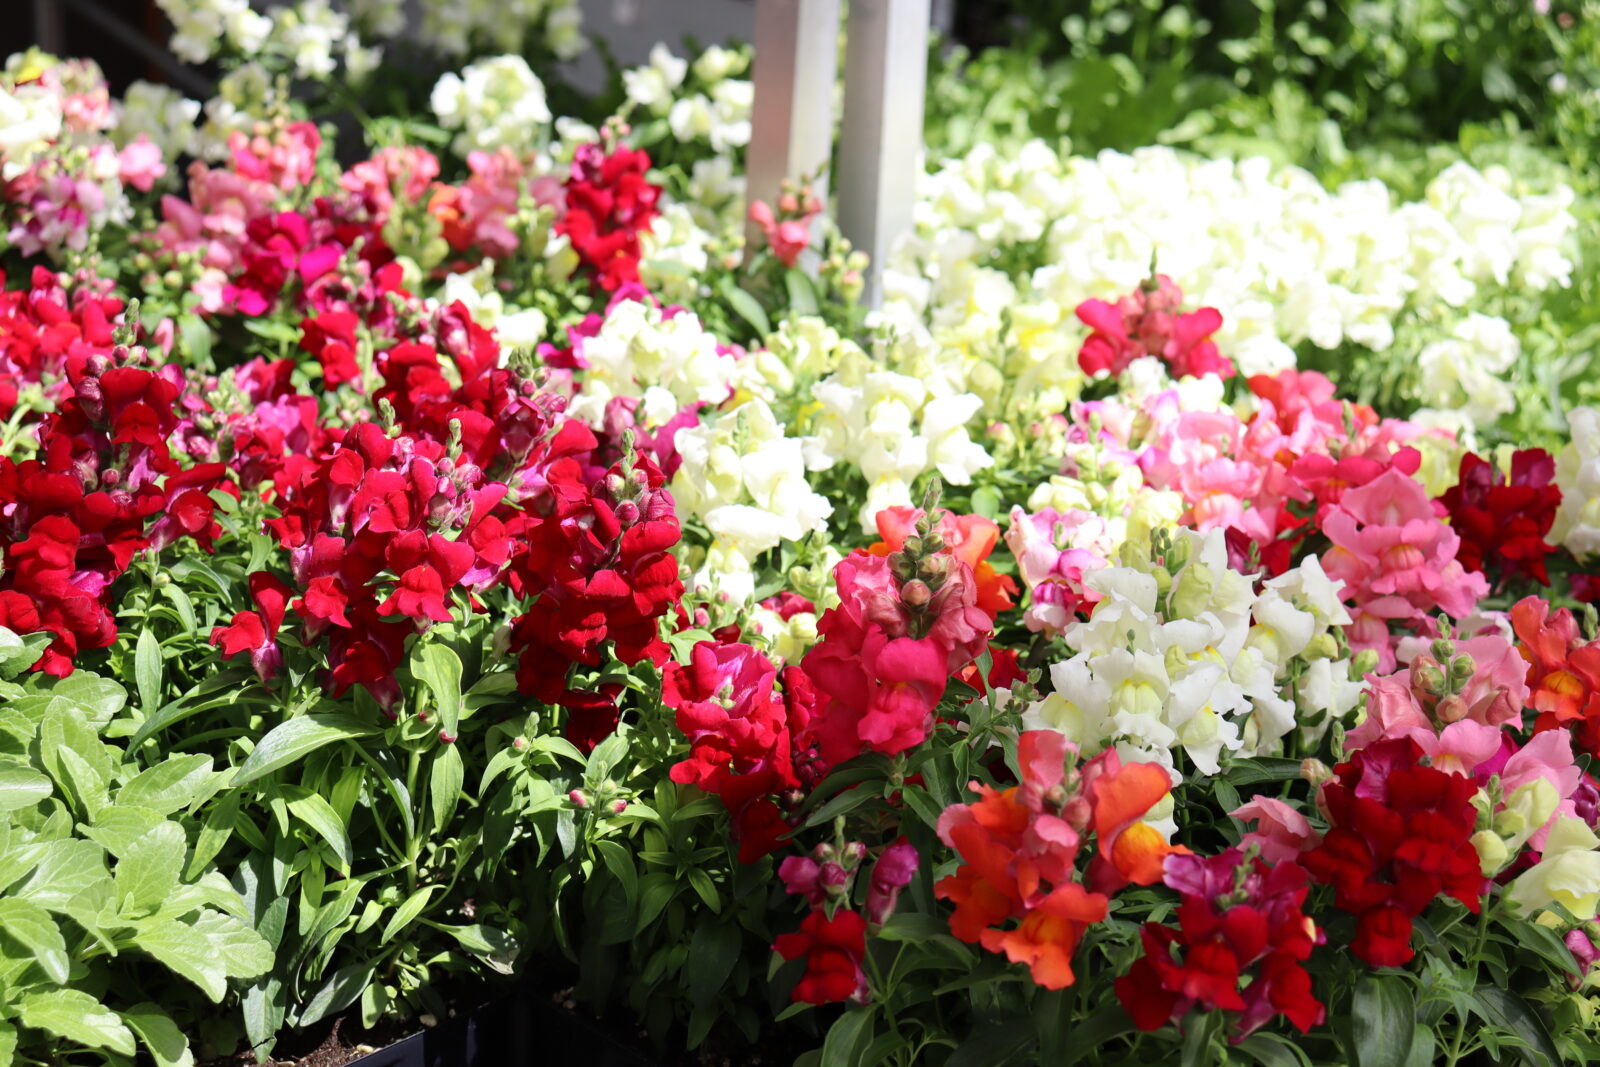 Assorted snapdragon flowers | Salisbury Greenhouse - St. Albert, Sherwood Park